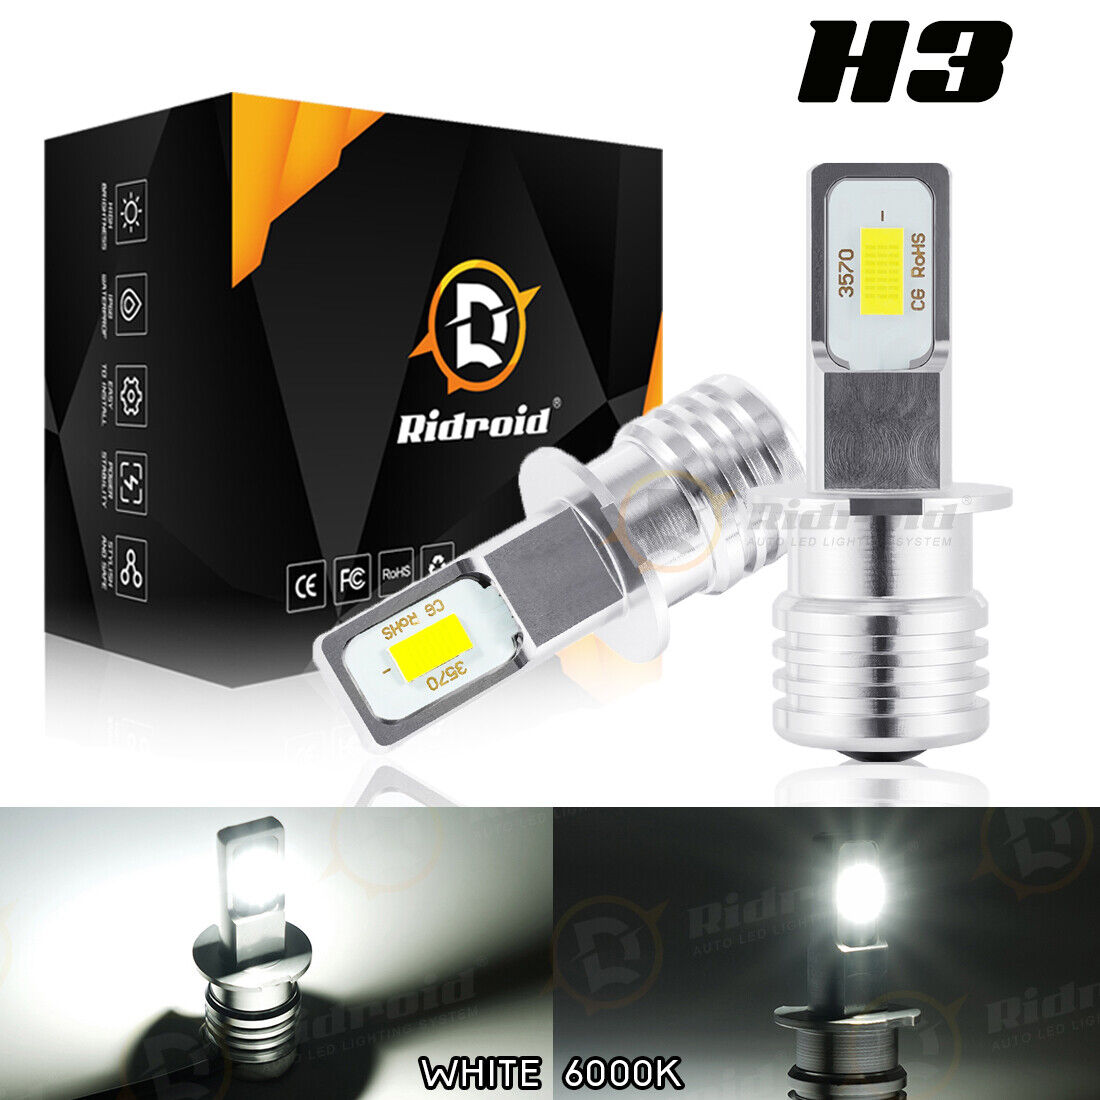 2pcs H3 LED Headlight 100W 10000LM FOG Light Bulbs 6000K White Driving DRL Lamp Ridroid rdddwd0h3